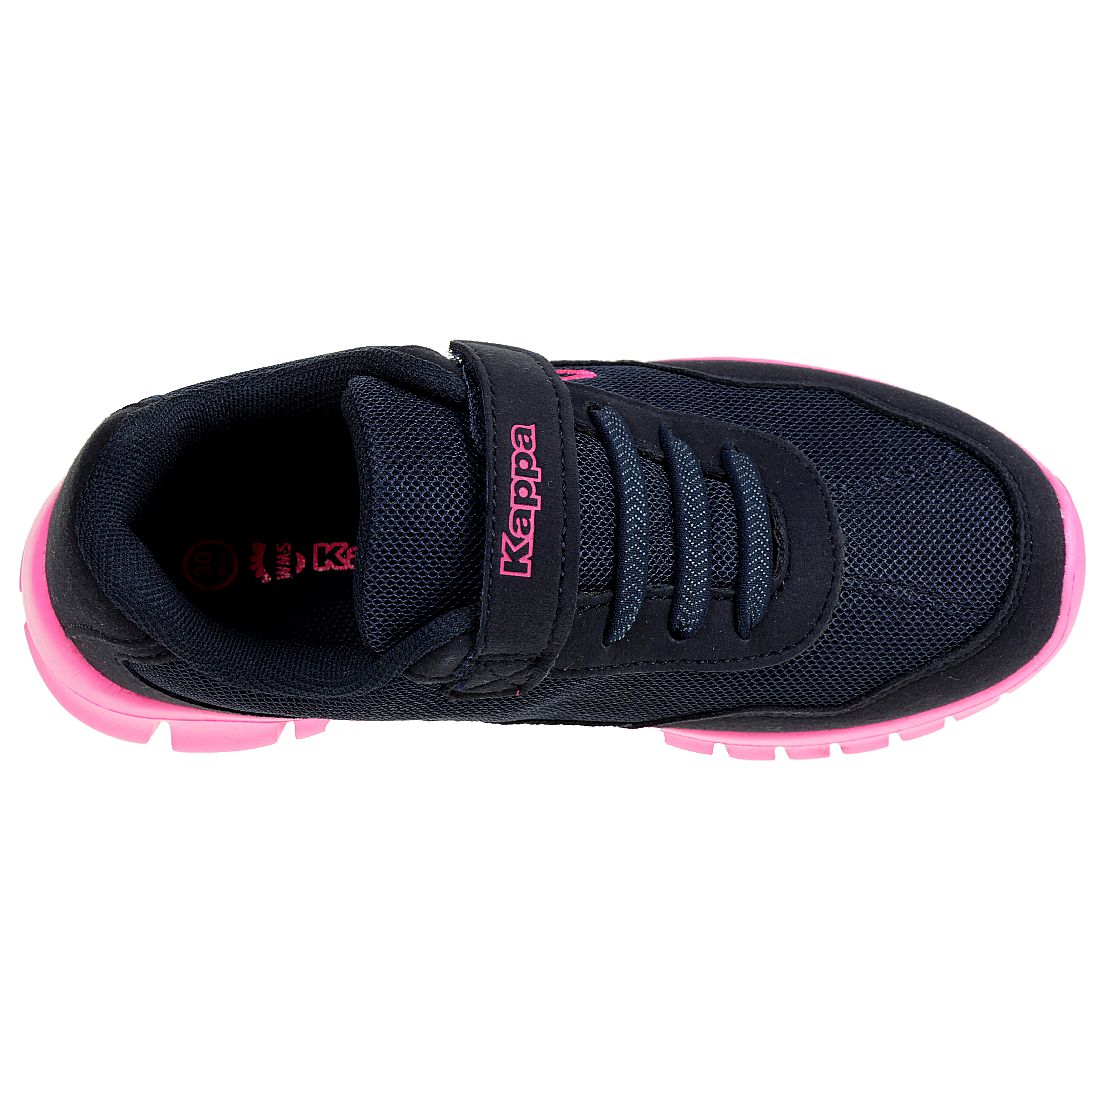 Sneaker Kappa K Mädchen Follow Schuhe blau/pink BC